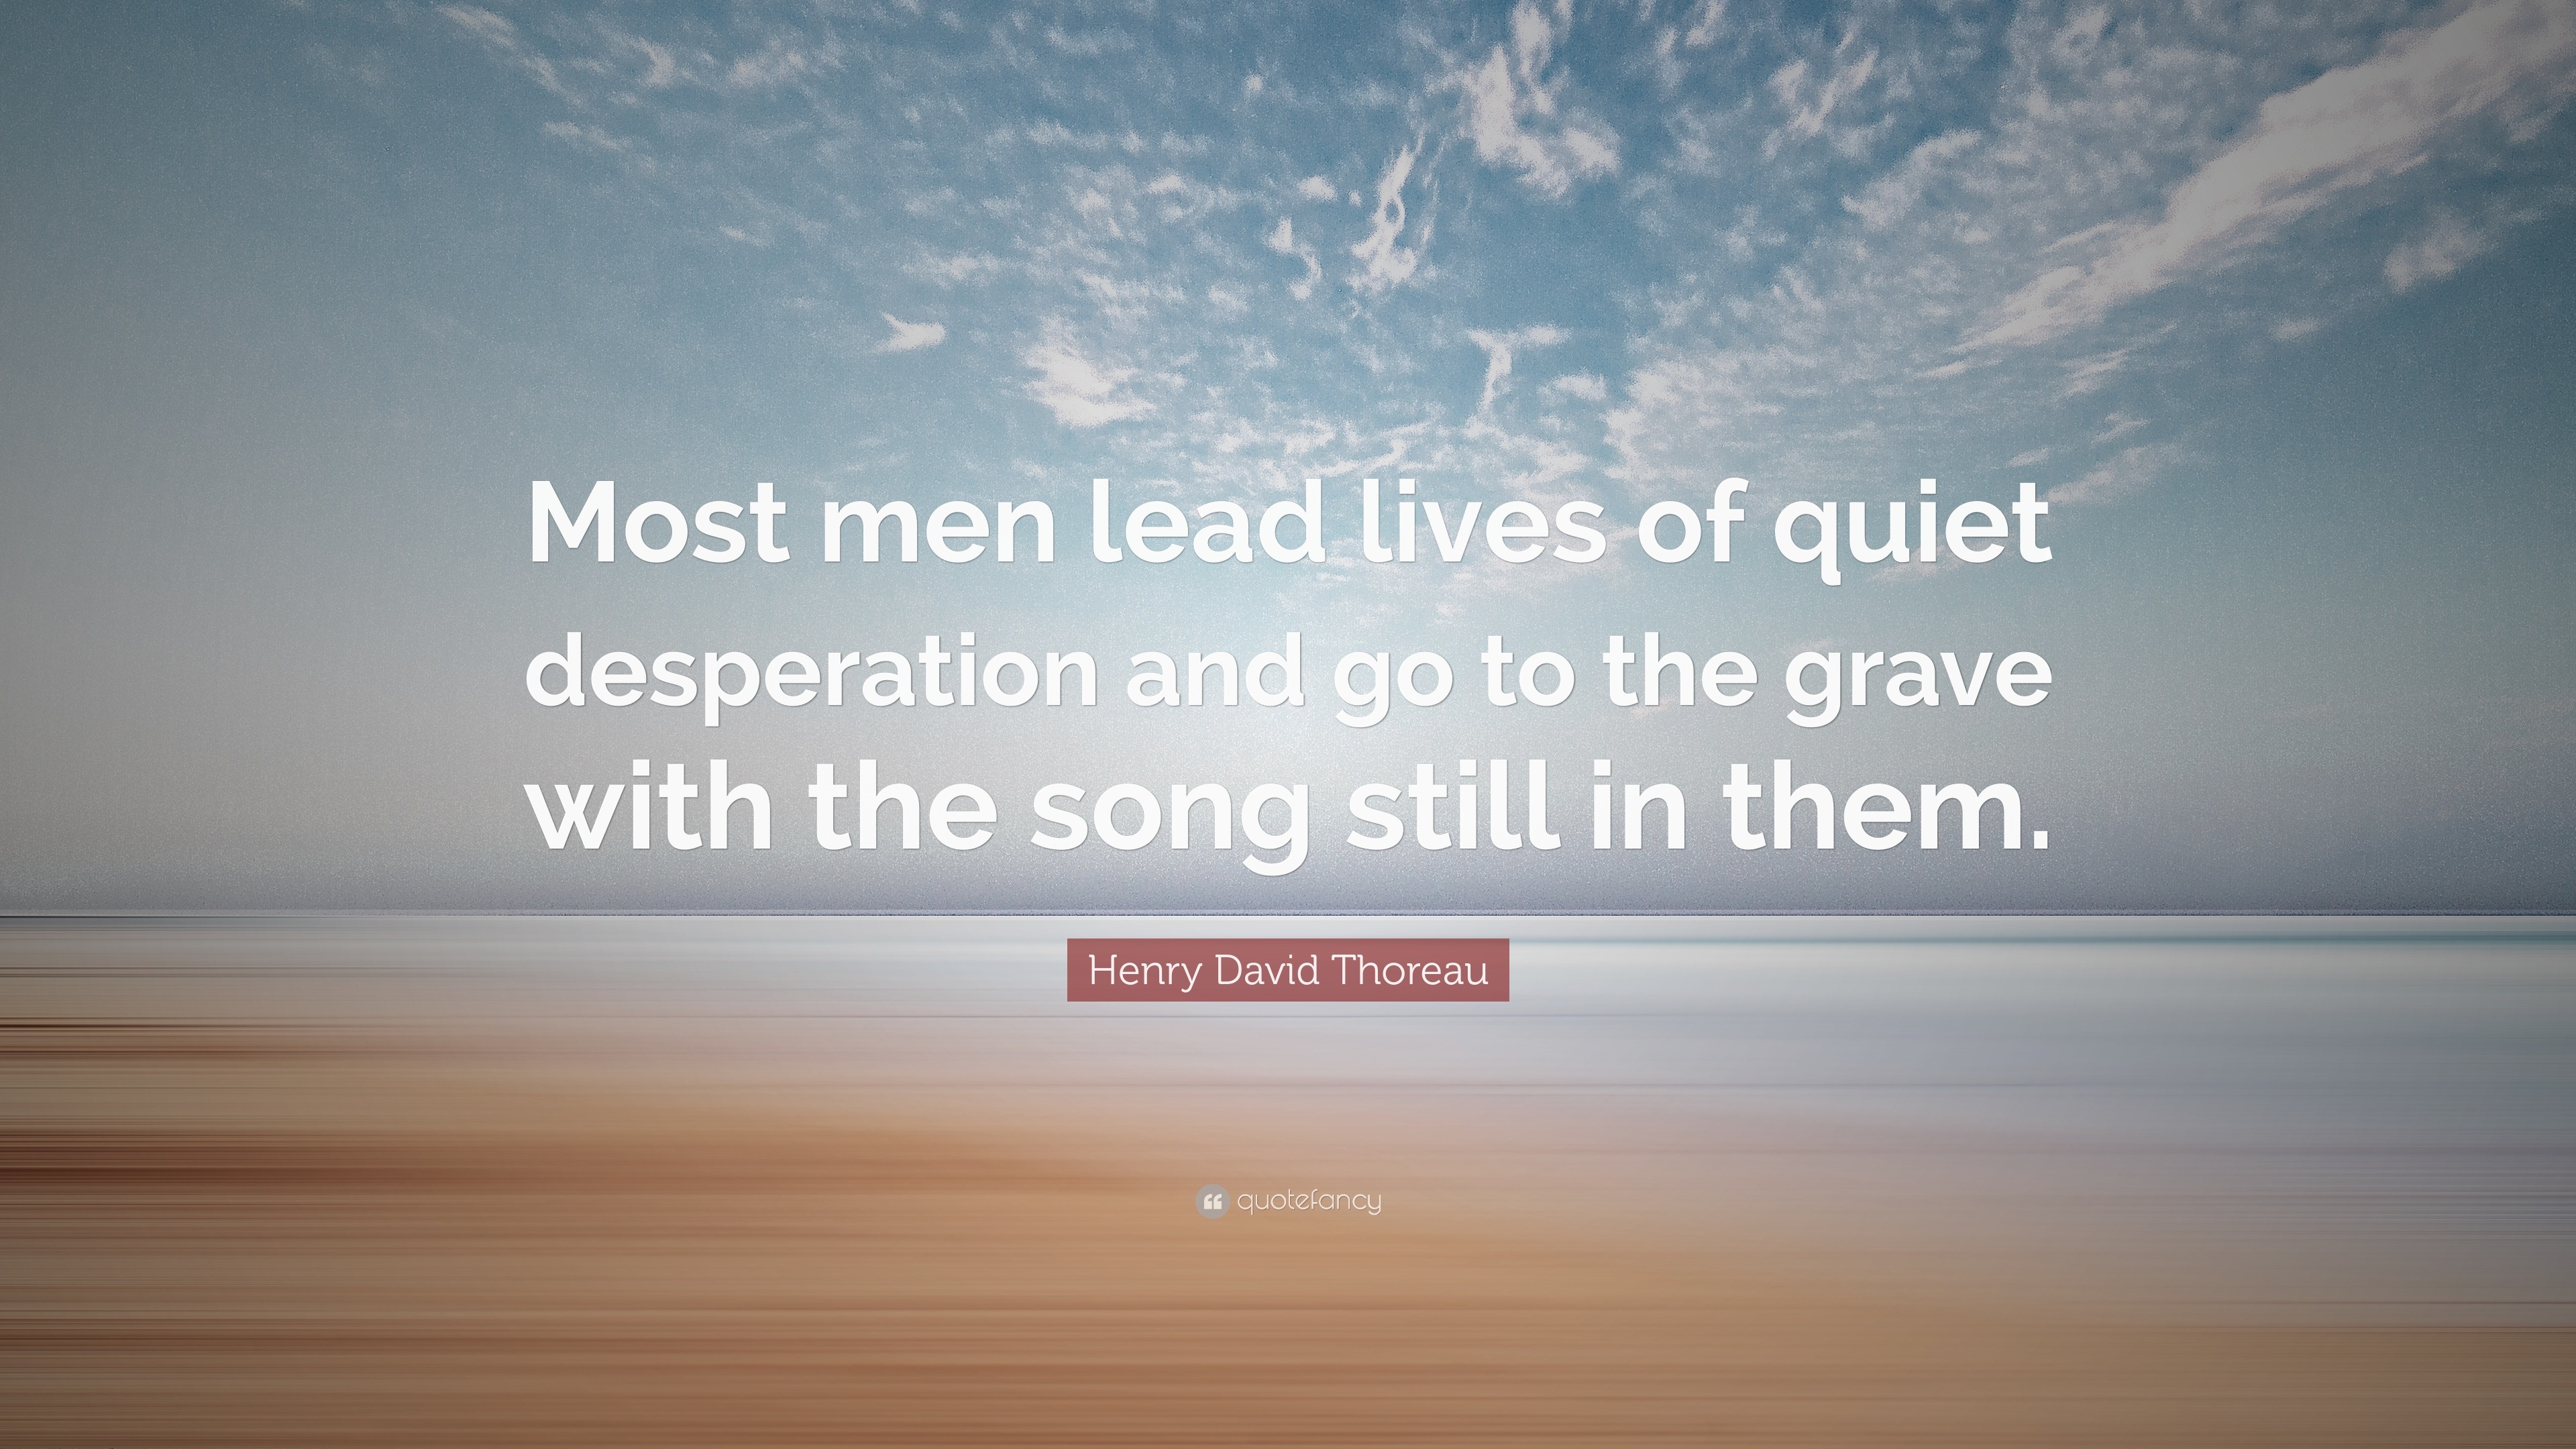 Henry David Thoreau Quote: “Most men lead lives of quiet desperation